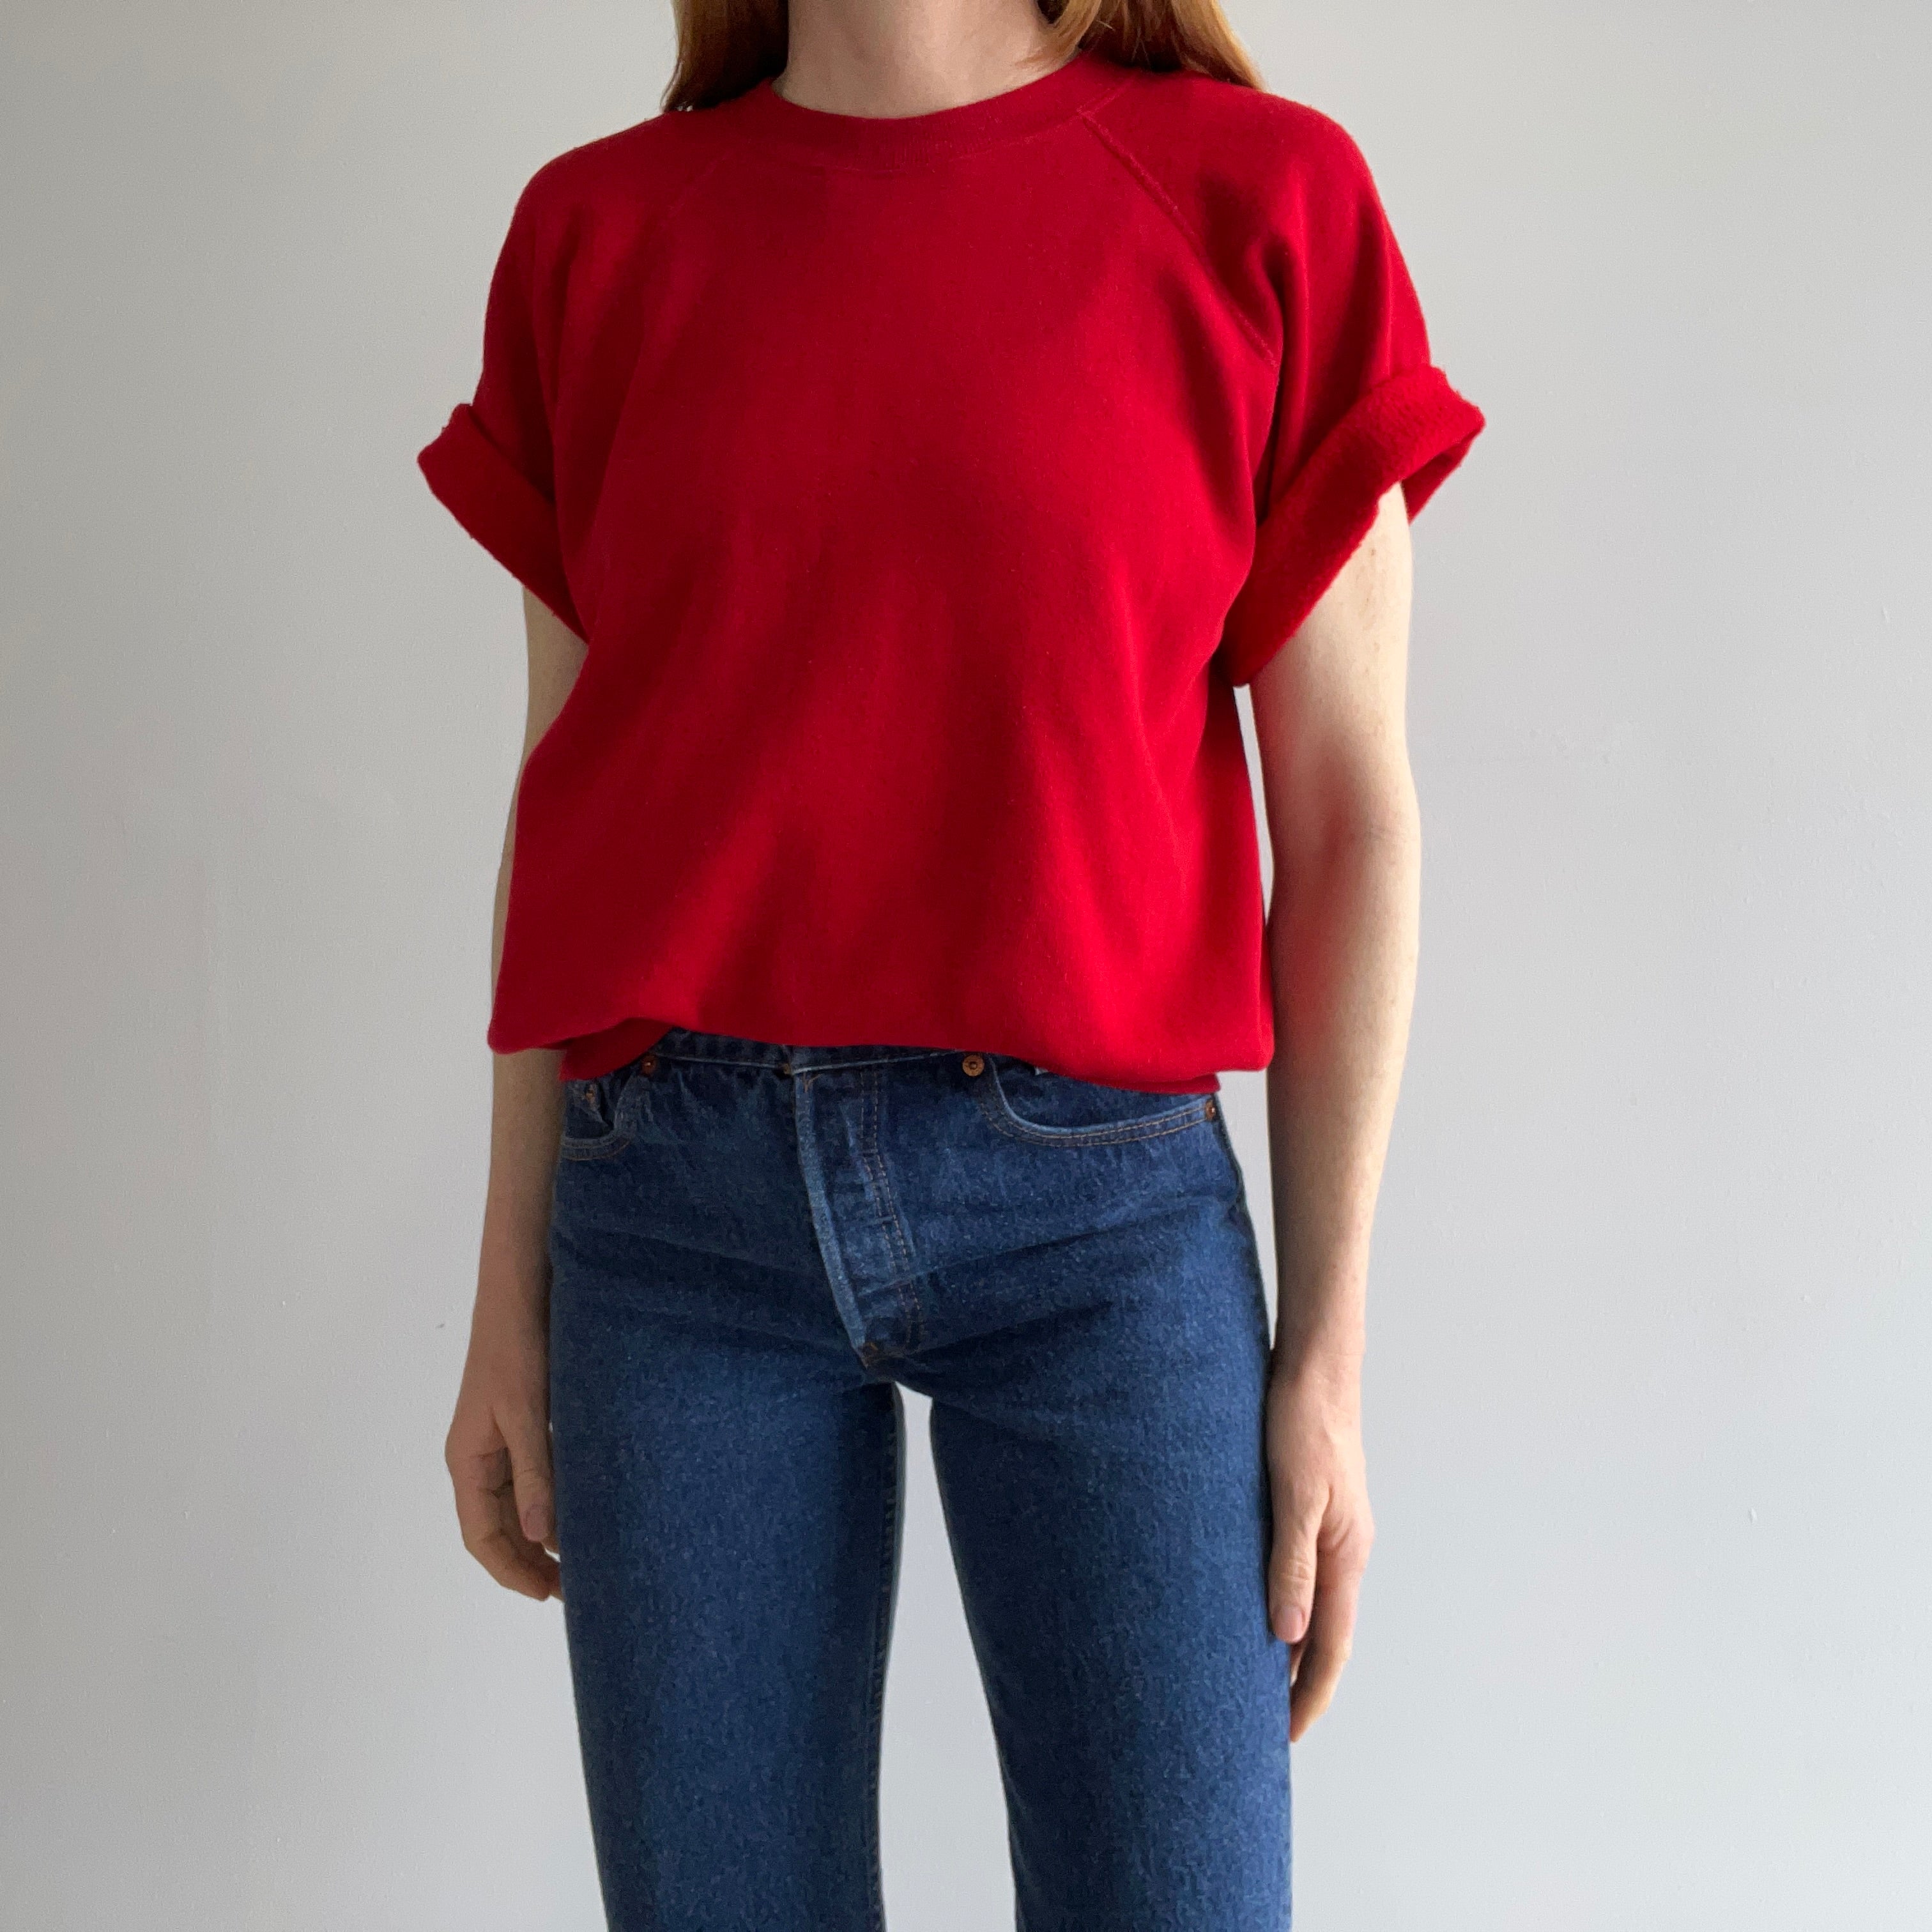 1980s Nail Polish Red Super Soft DIY Warm Up Sweatshirt